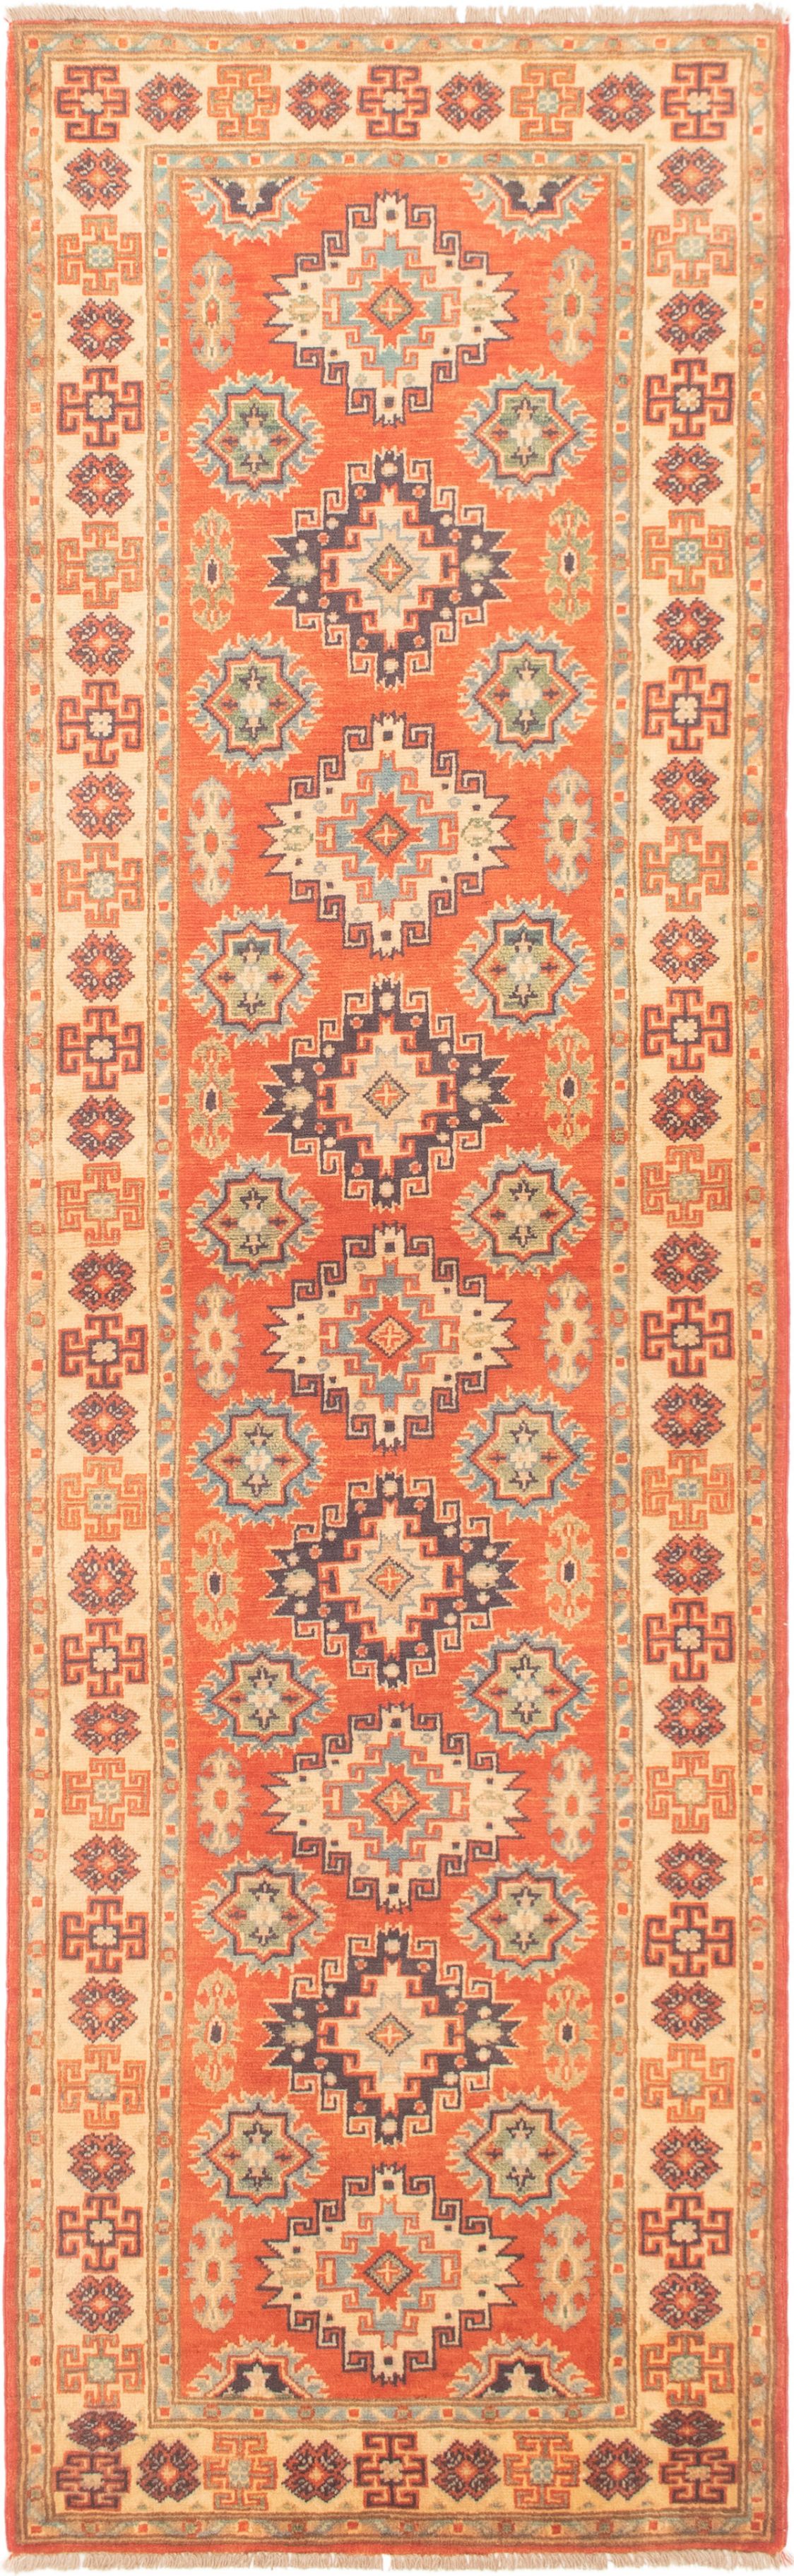 Hand-knotted Finest Gazni Dark Copper Wool Rug 2'9" x 9'5" Size: 2'9" x 9'5"  